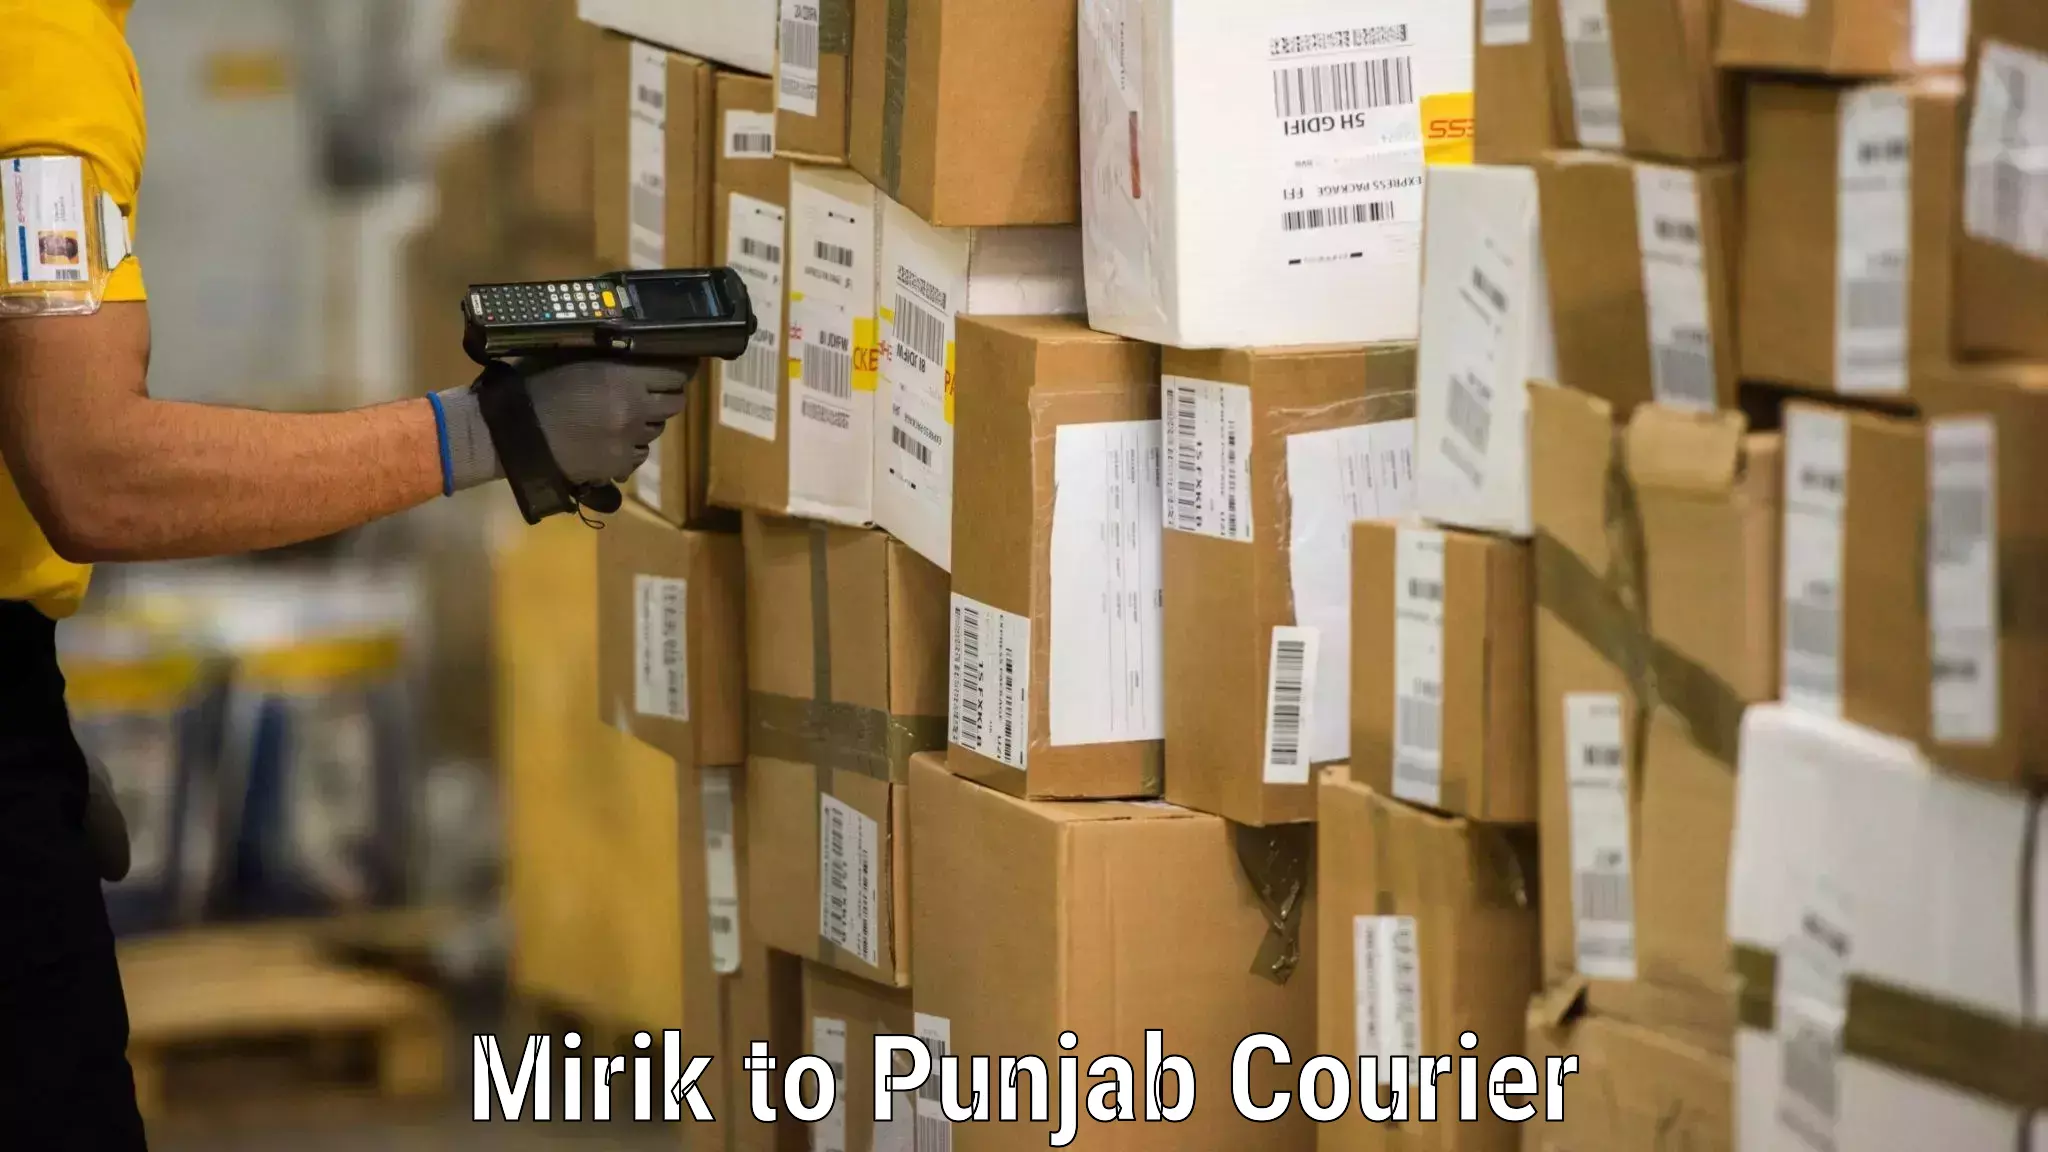 Professional moving company Mirik to Punjab